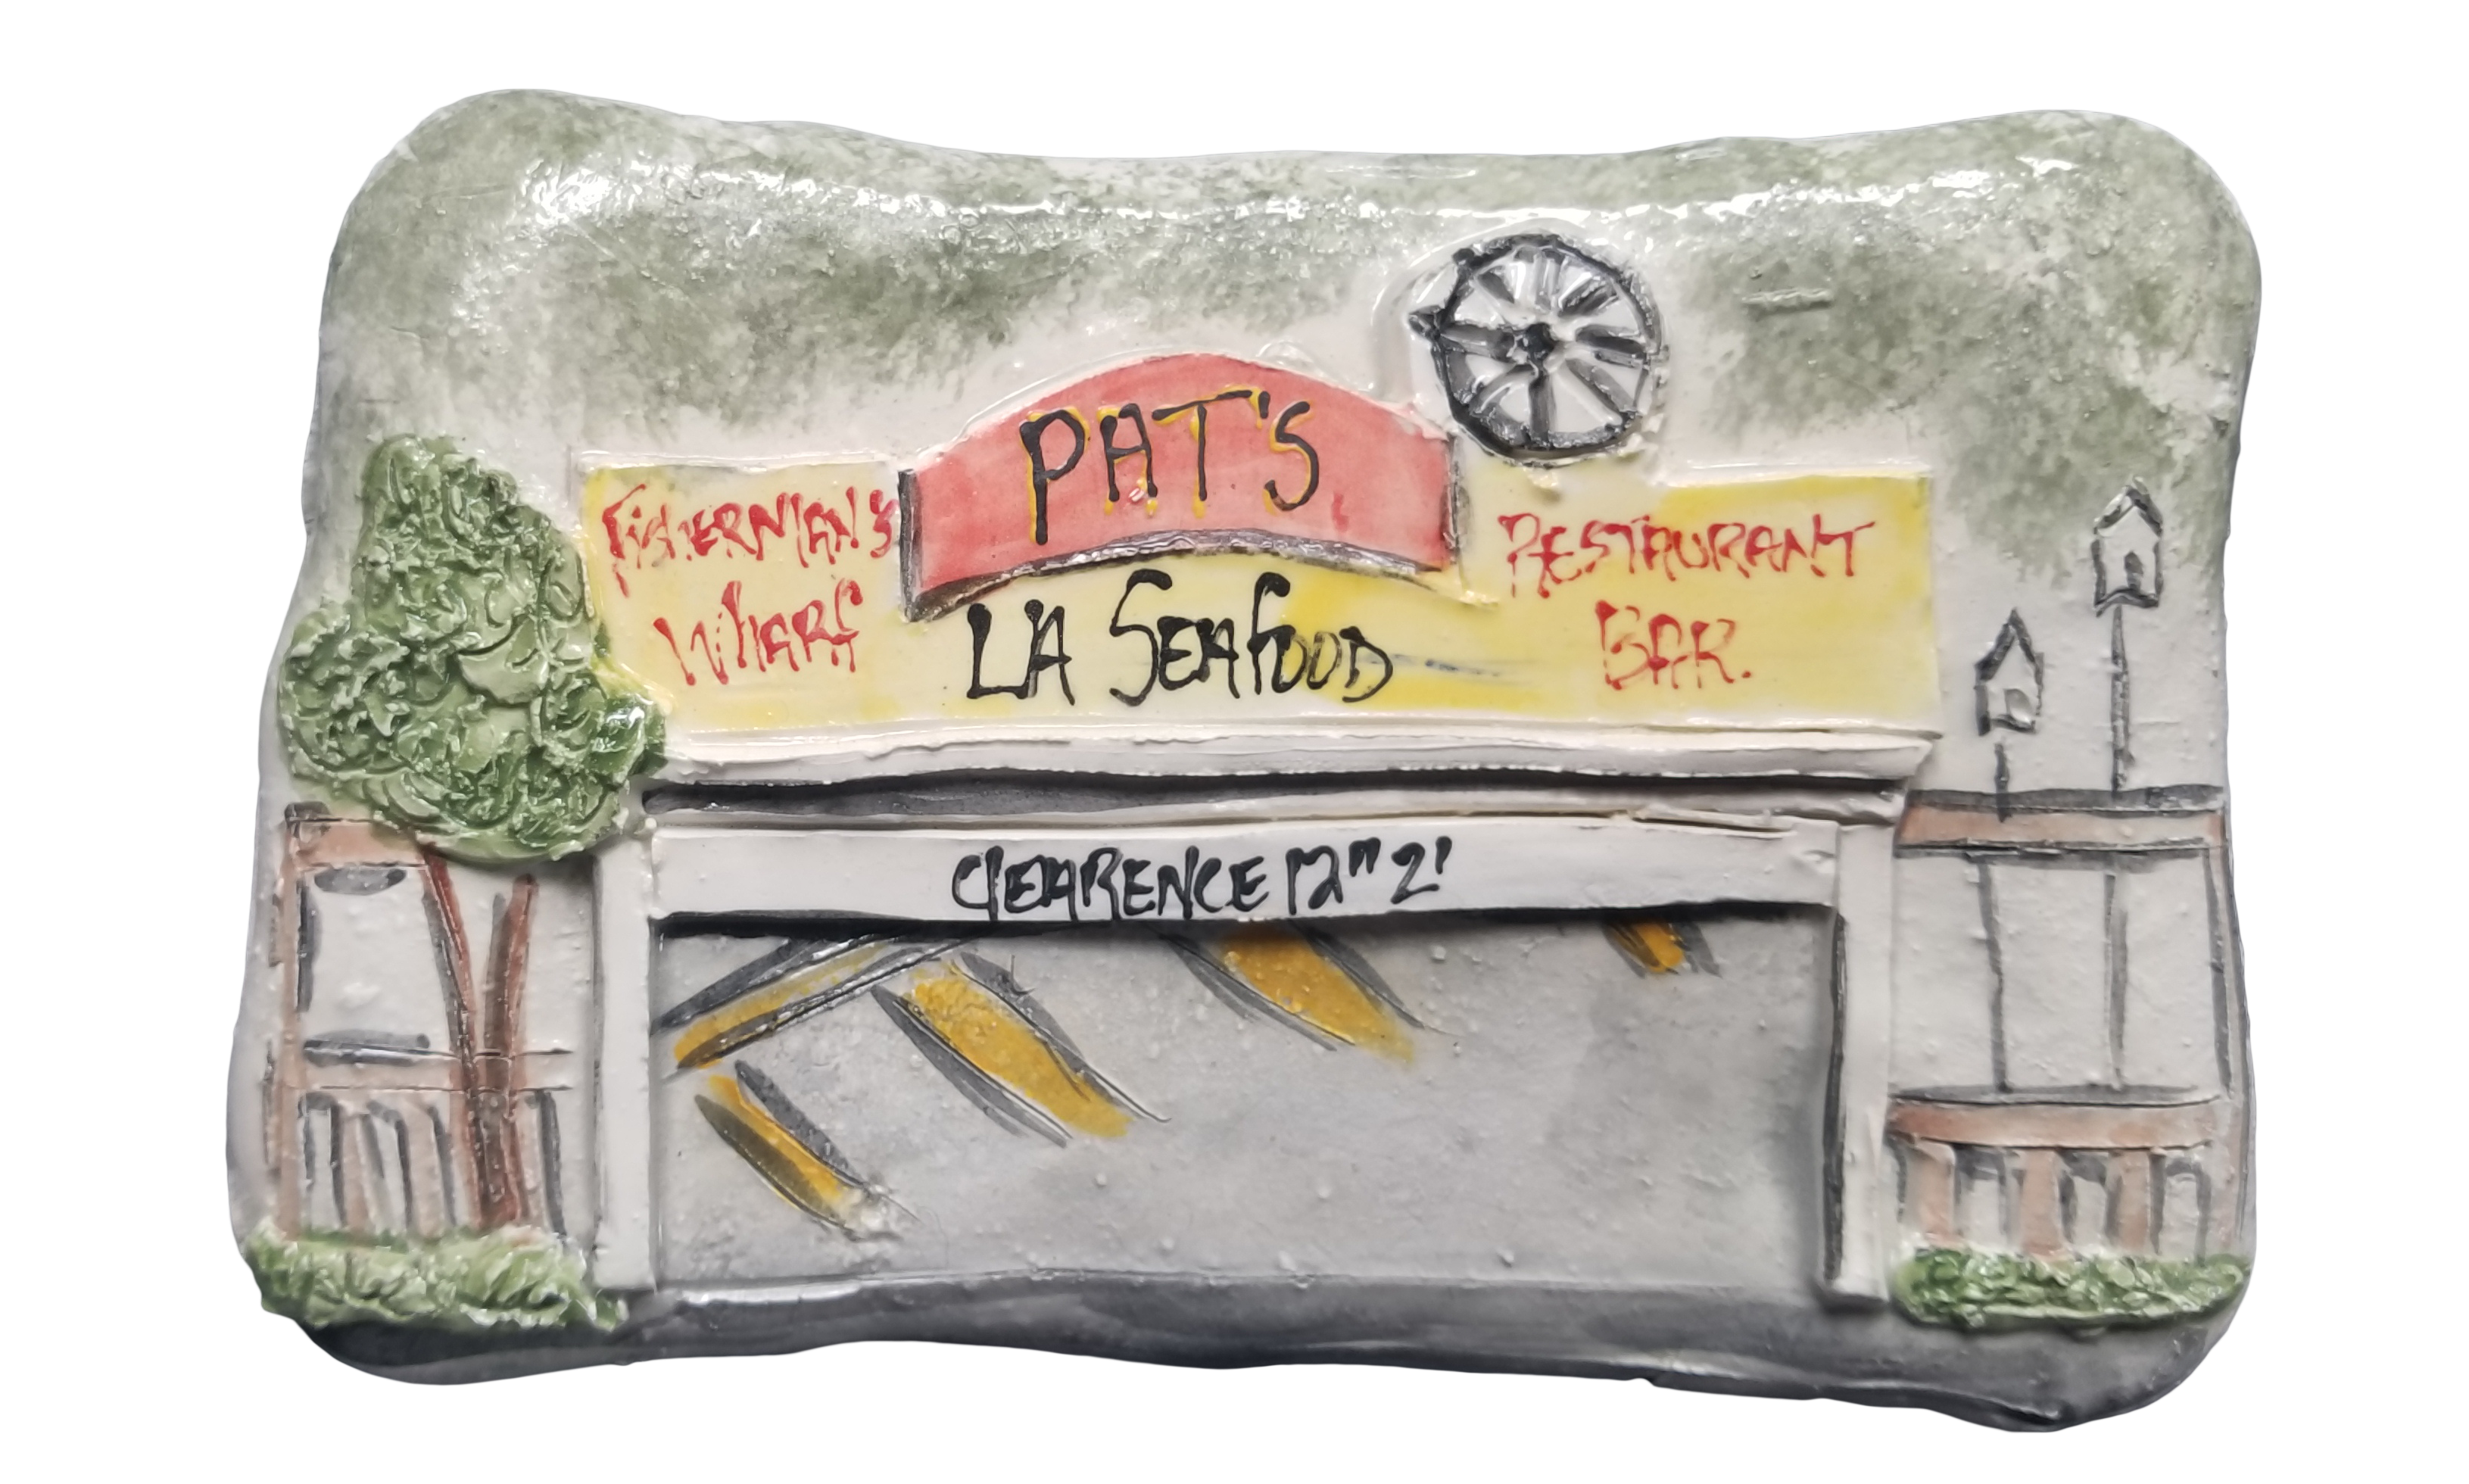 Pat’s Restaurant